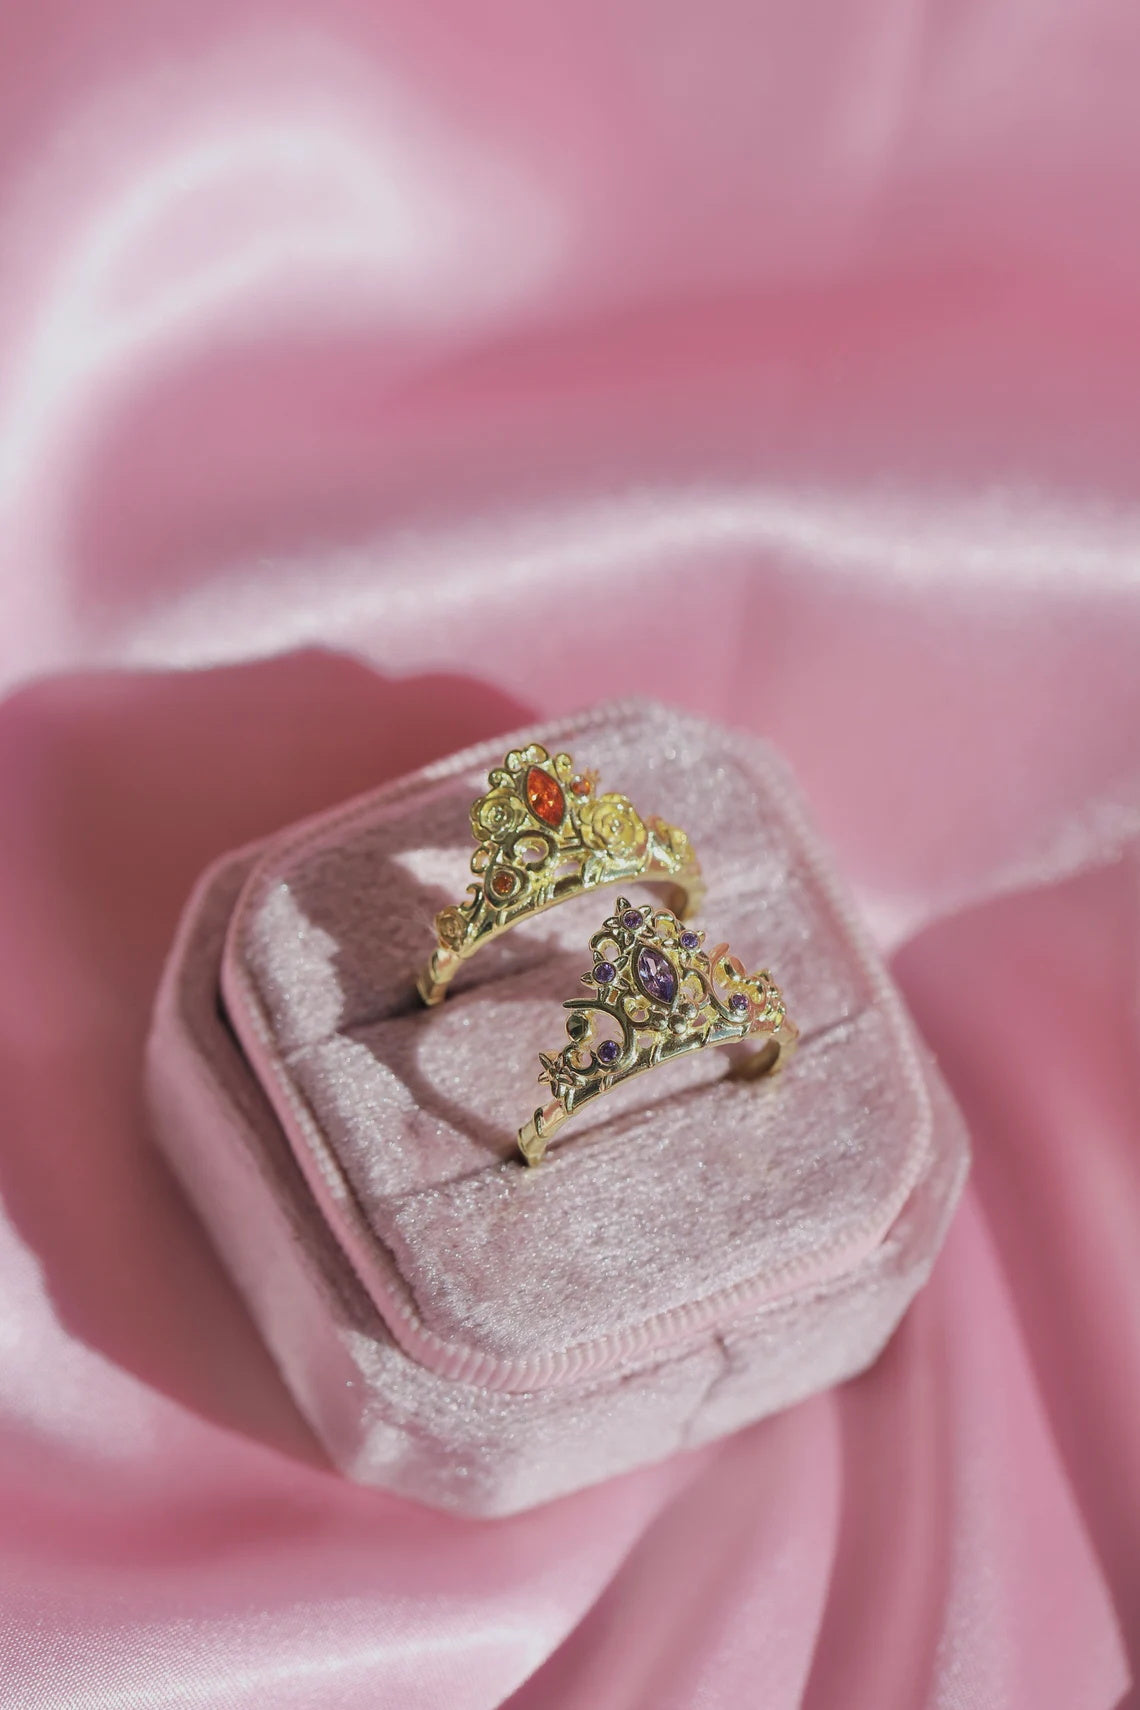 Diamond Castle Liana And Alexa Crown Ring, Friendship Ring Birthday Gift